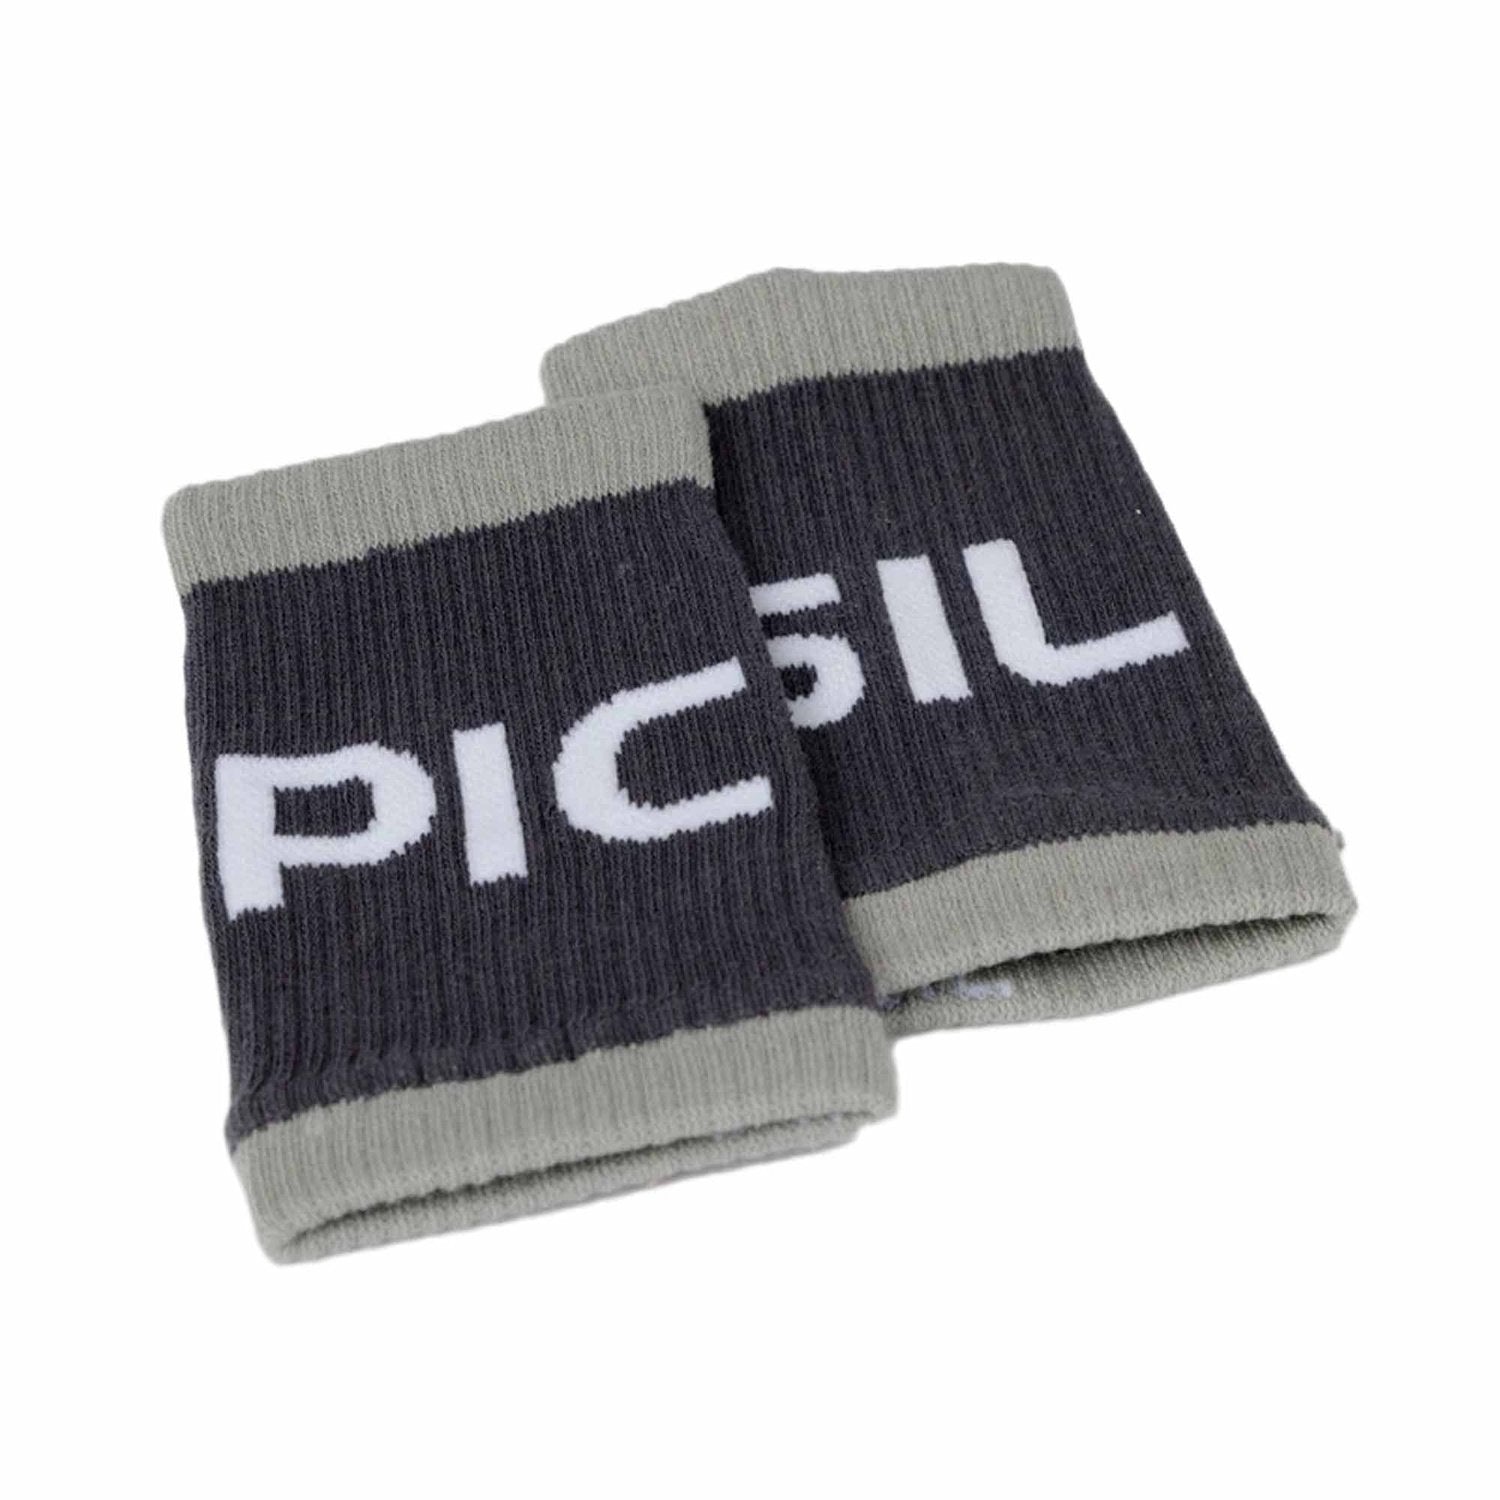 PicSil Wrist Bands (Schweissbänder) kaufen bei HighPowered.ch